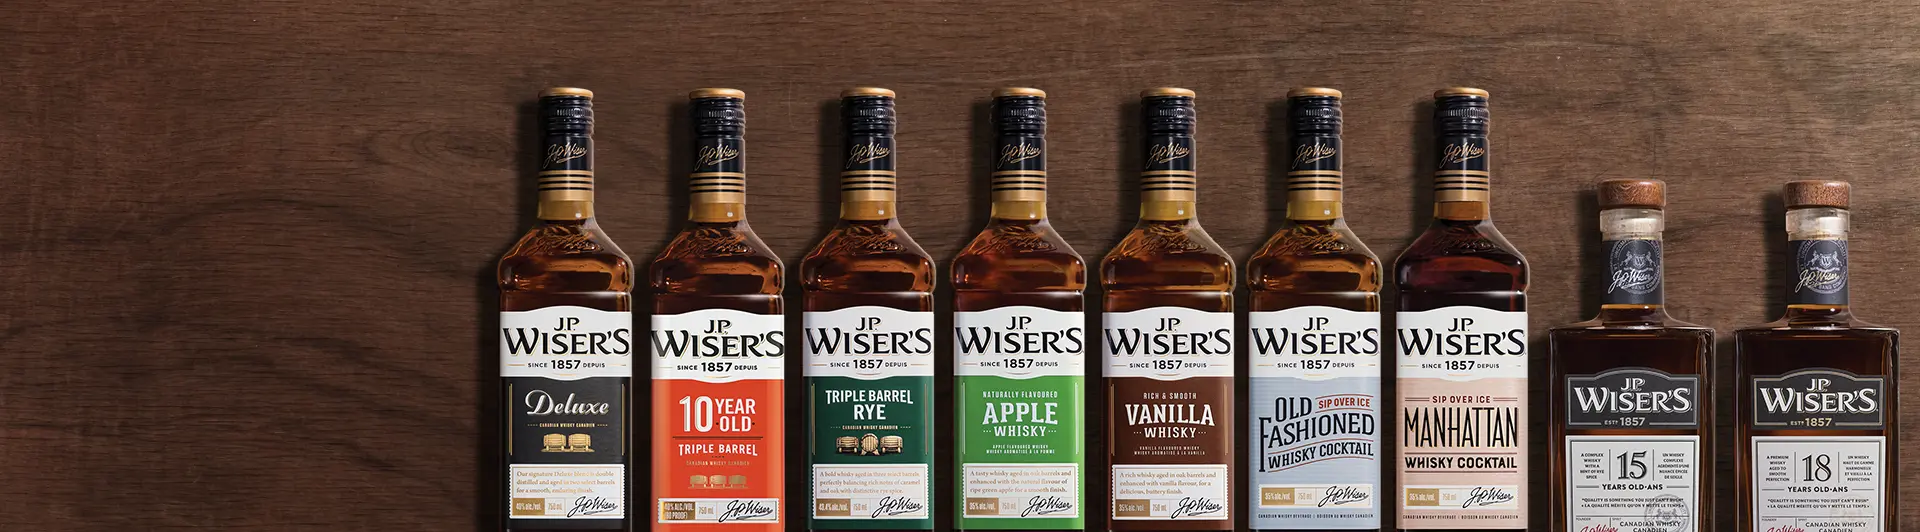 J.P. Wiser's Canadian Whisky Family Portfolio